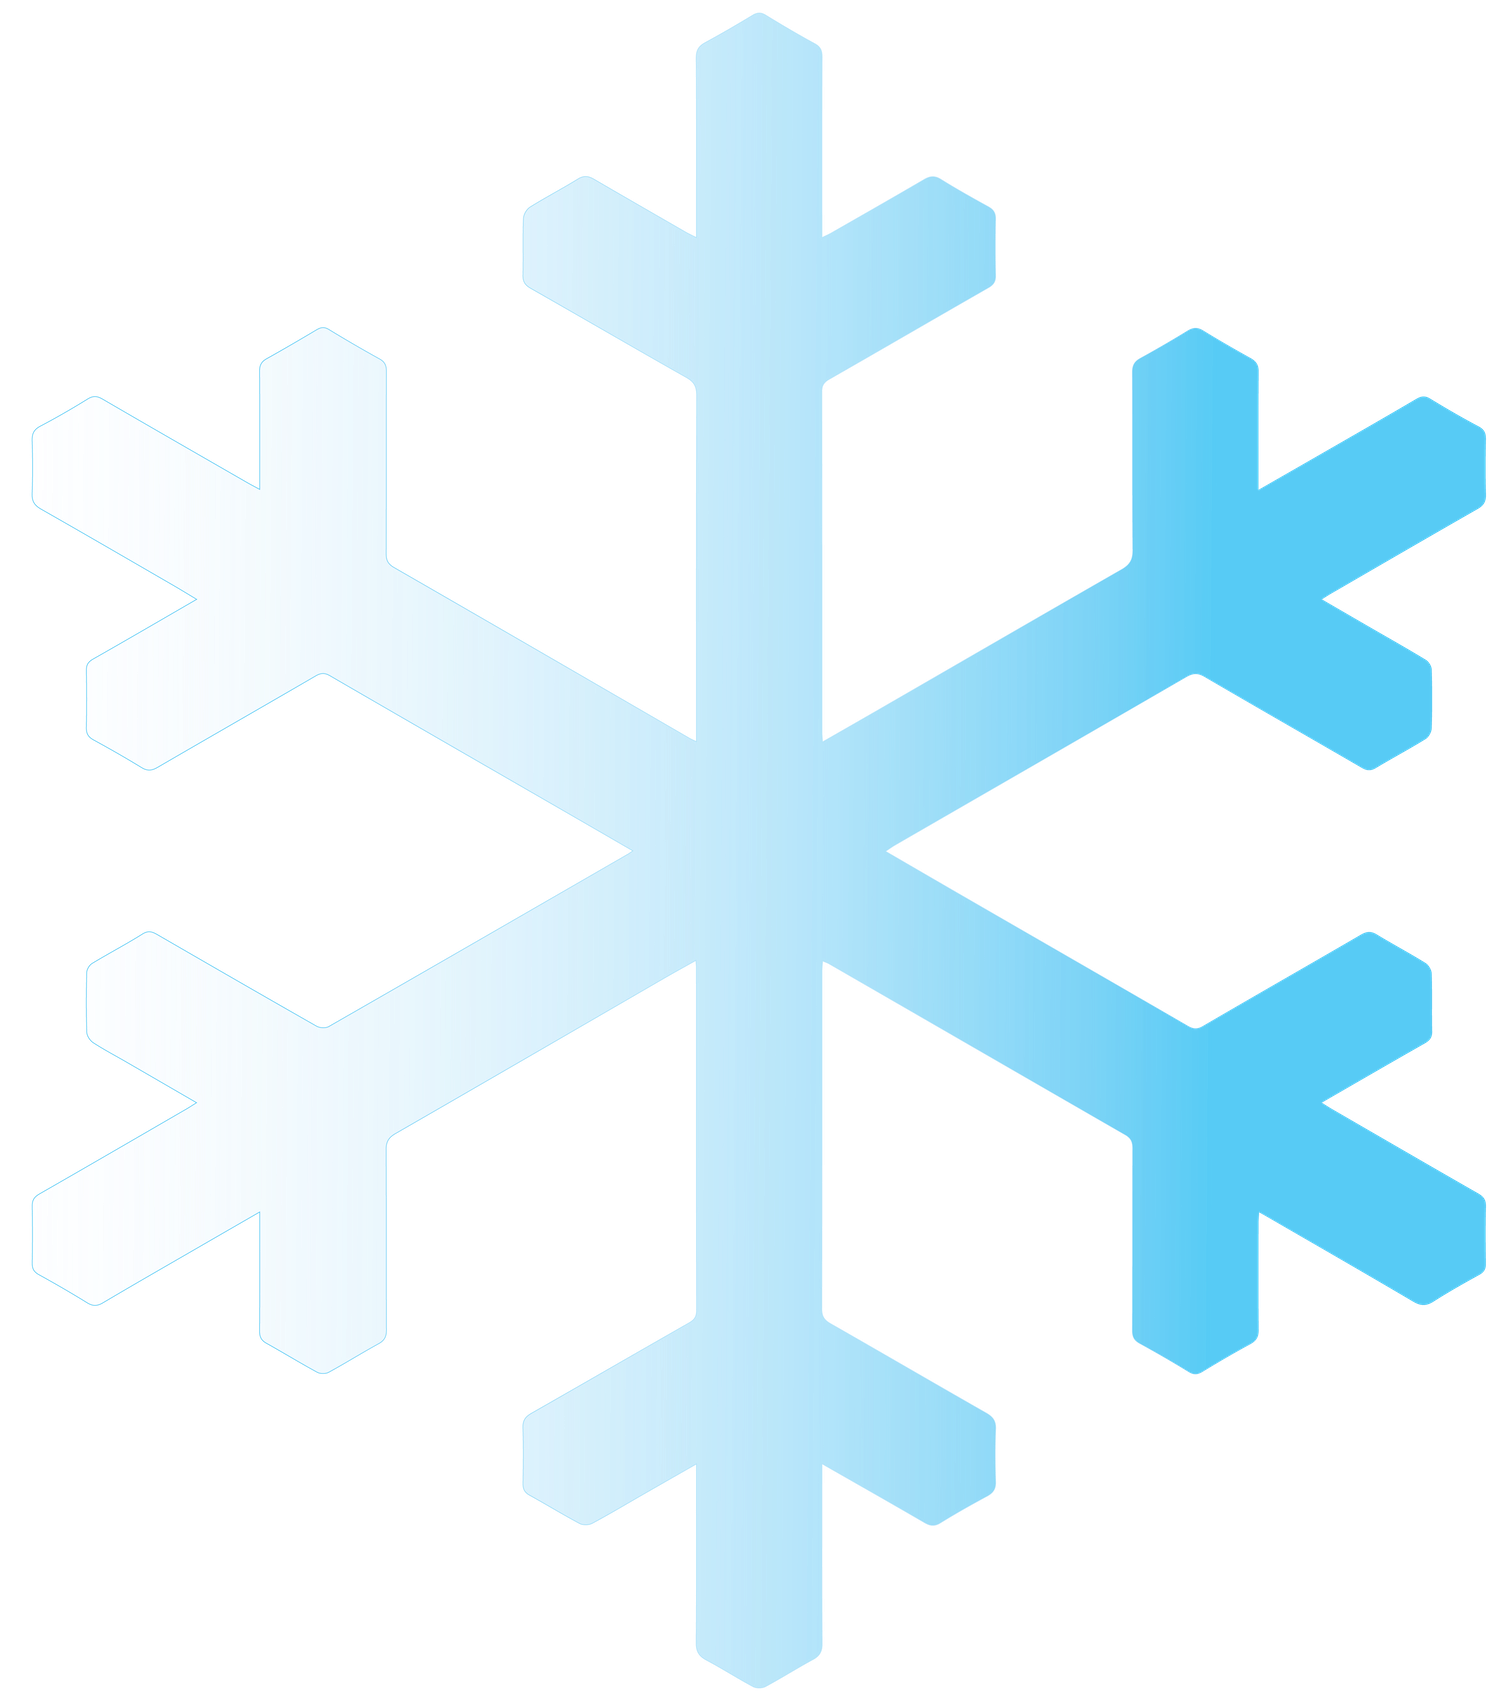 Gradient blue and white snowflake icon